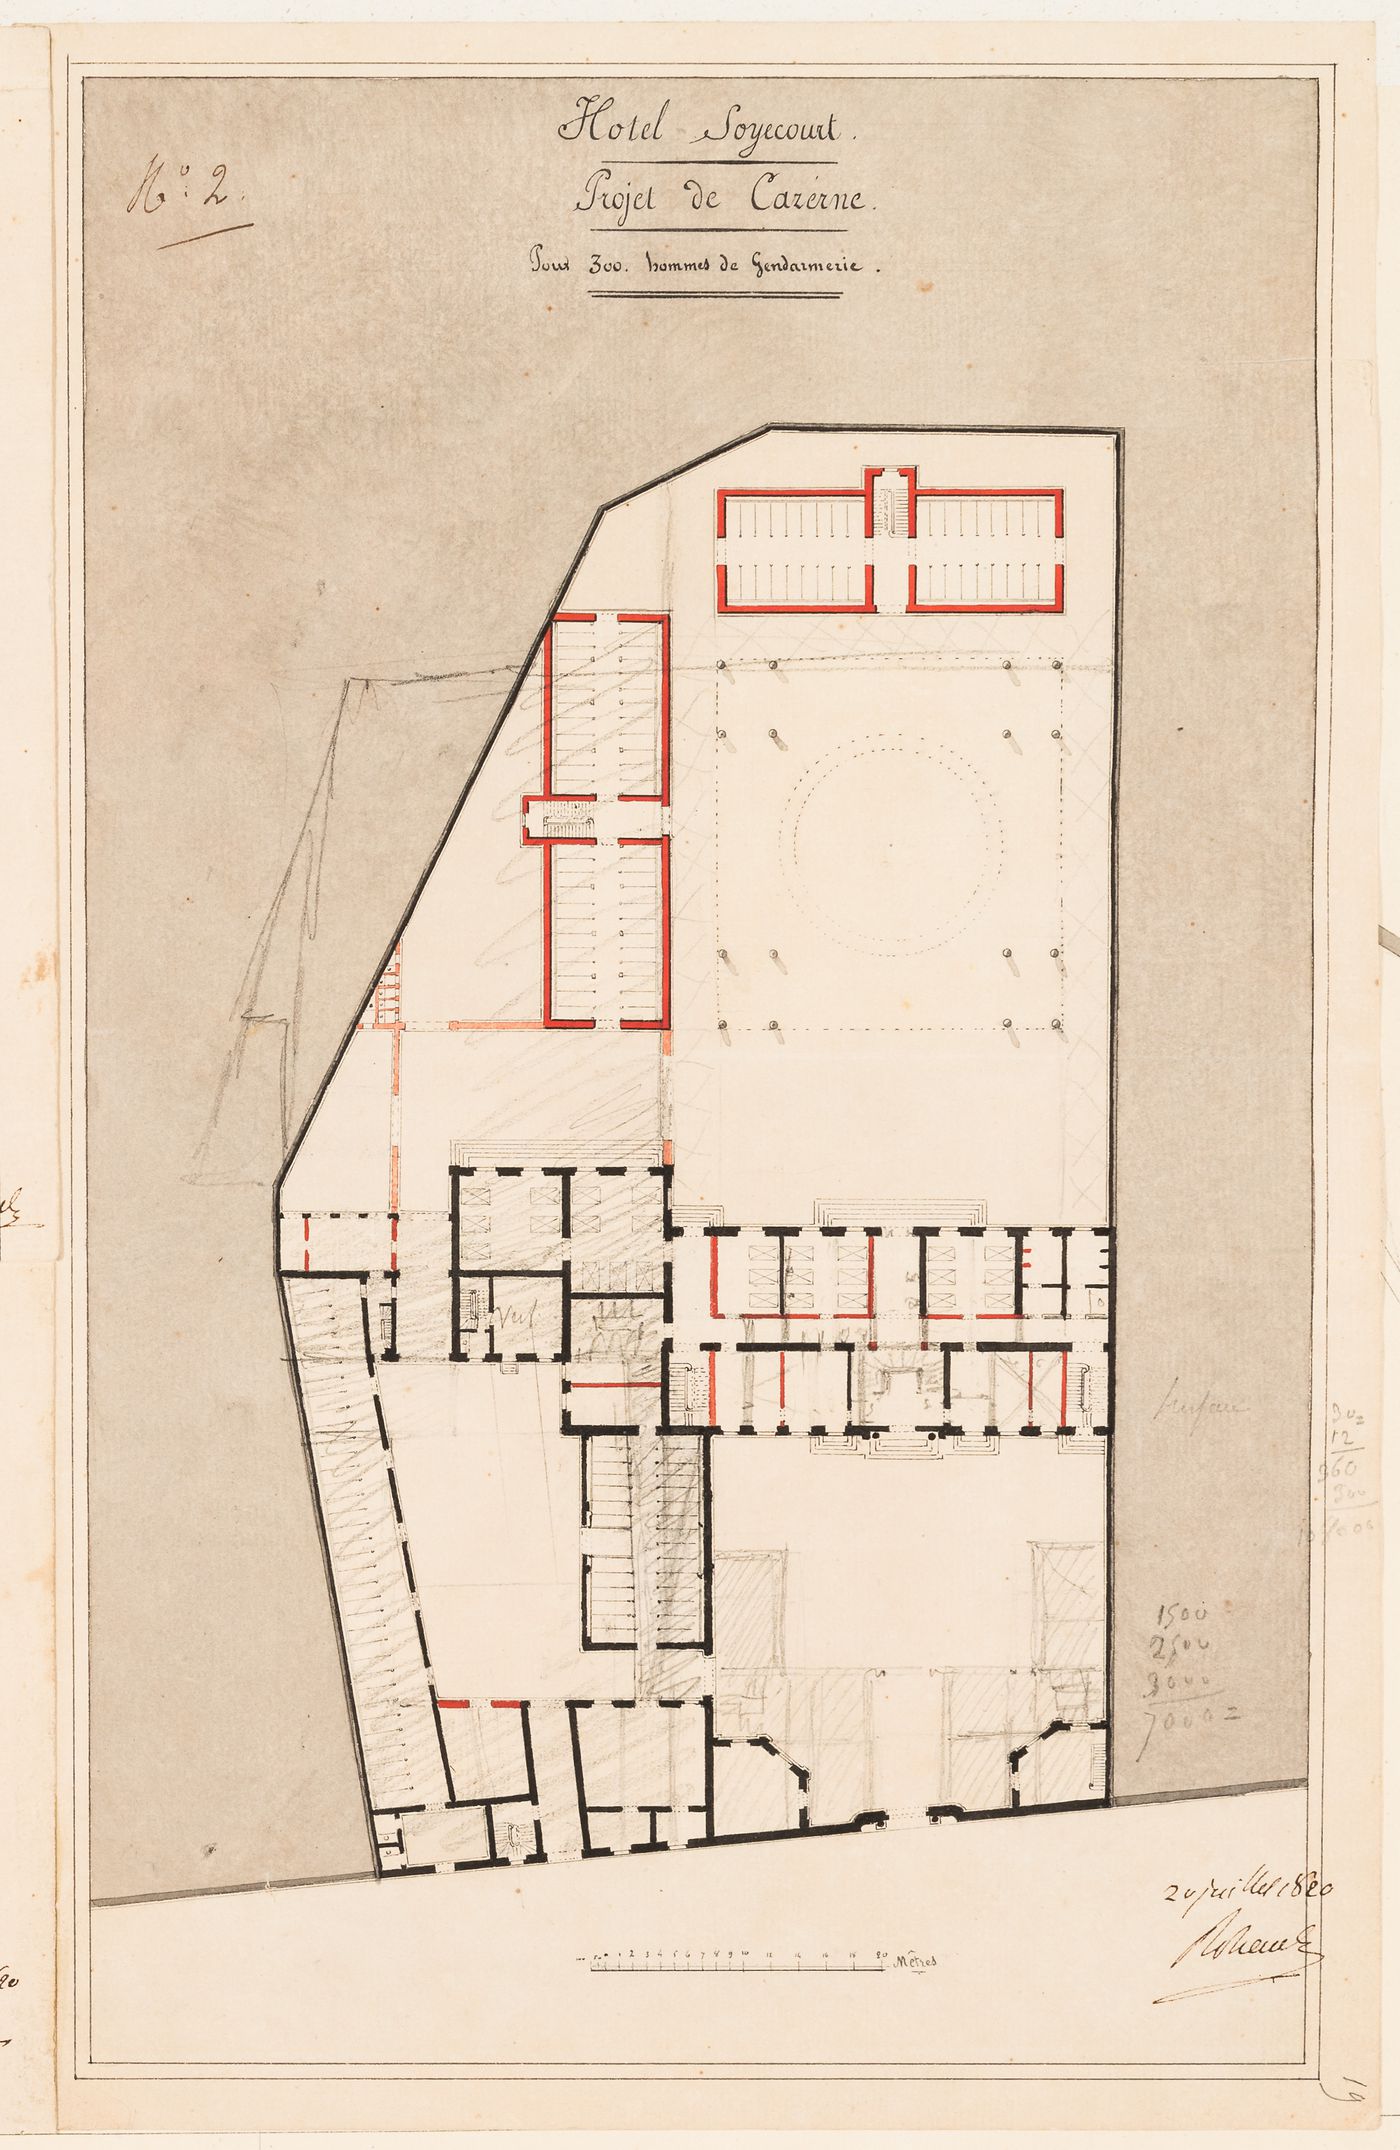 Project for the conversion of Hôtel Soyécourt, Paris, into barracks to house 300 gendarmes: Ground floor plan